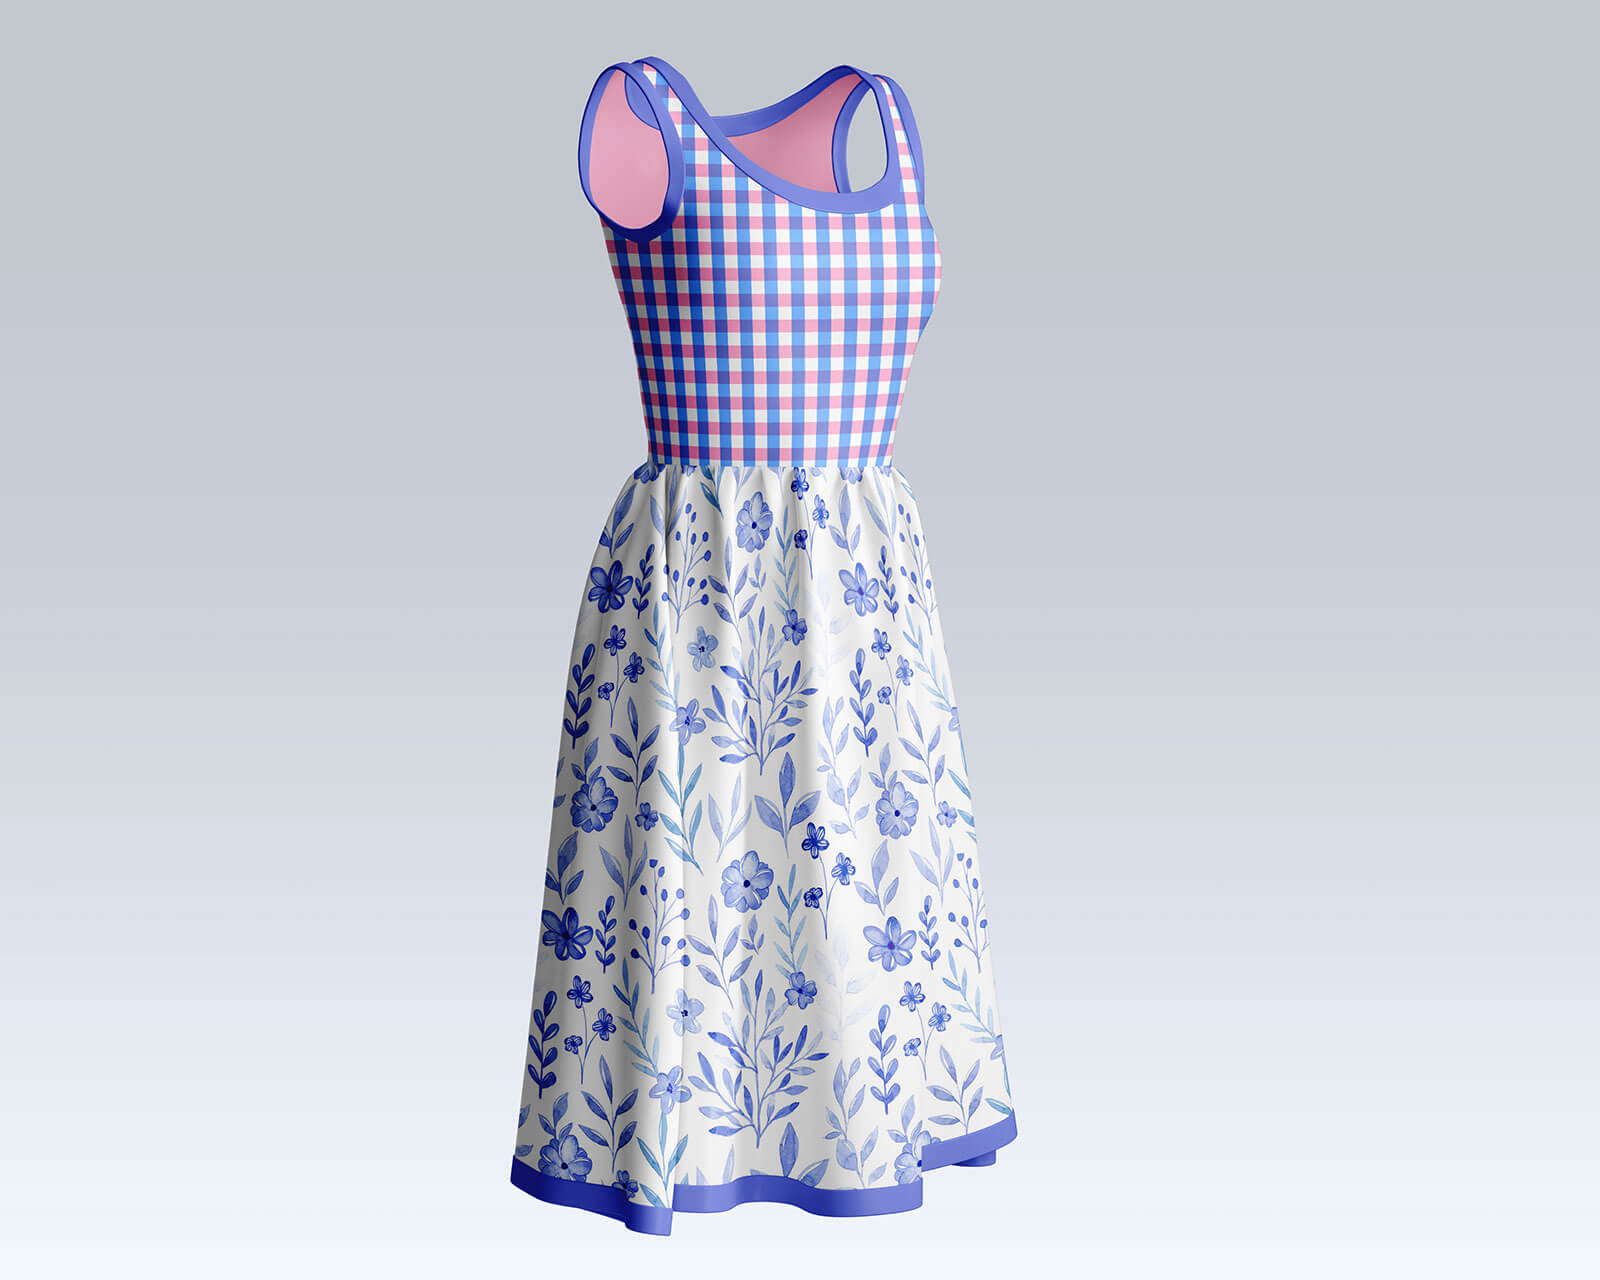 Free Sleeveless Women Summer Dress Mockup PSD Set (1)